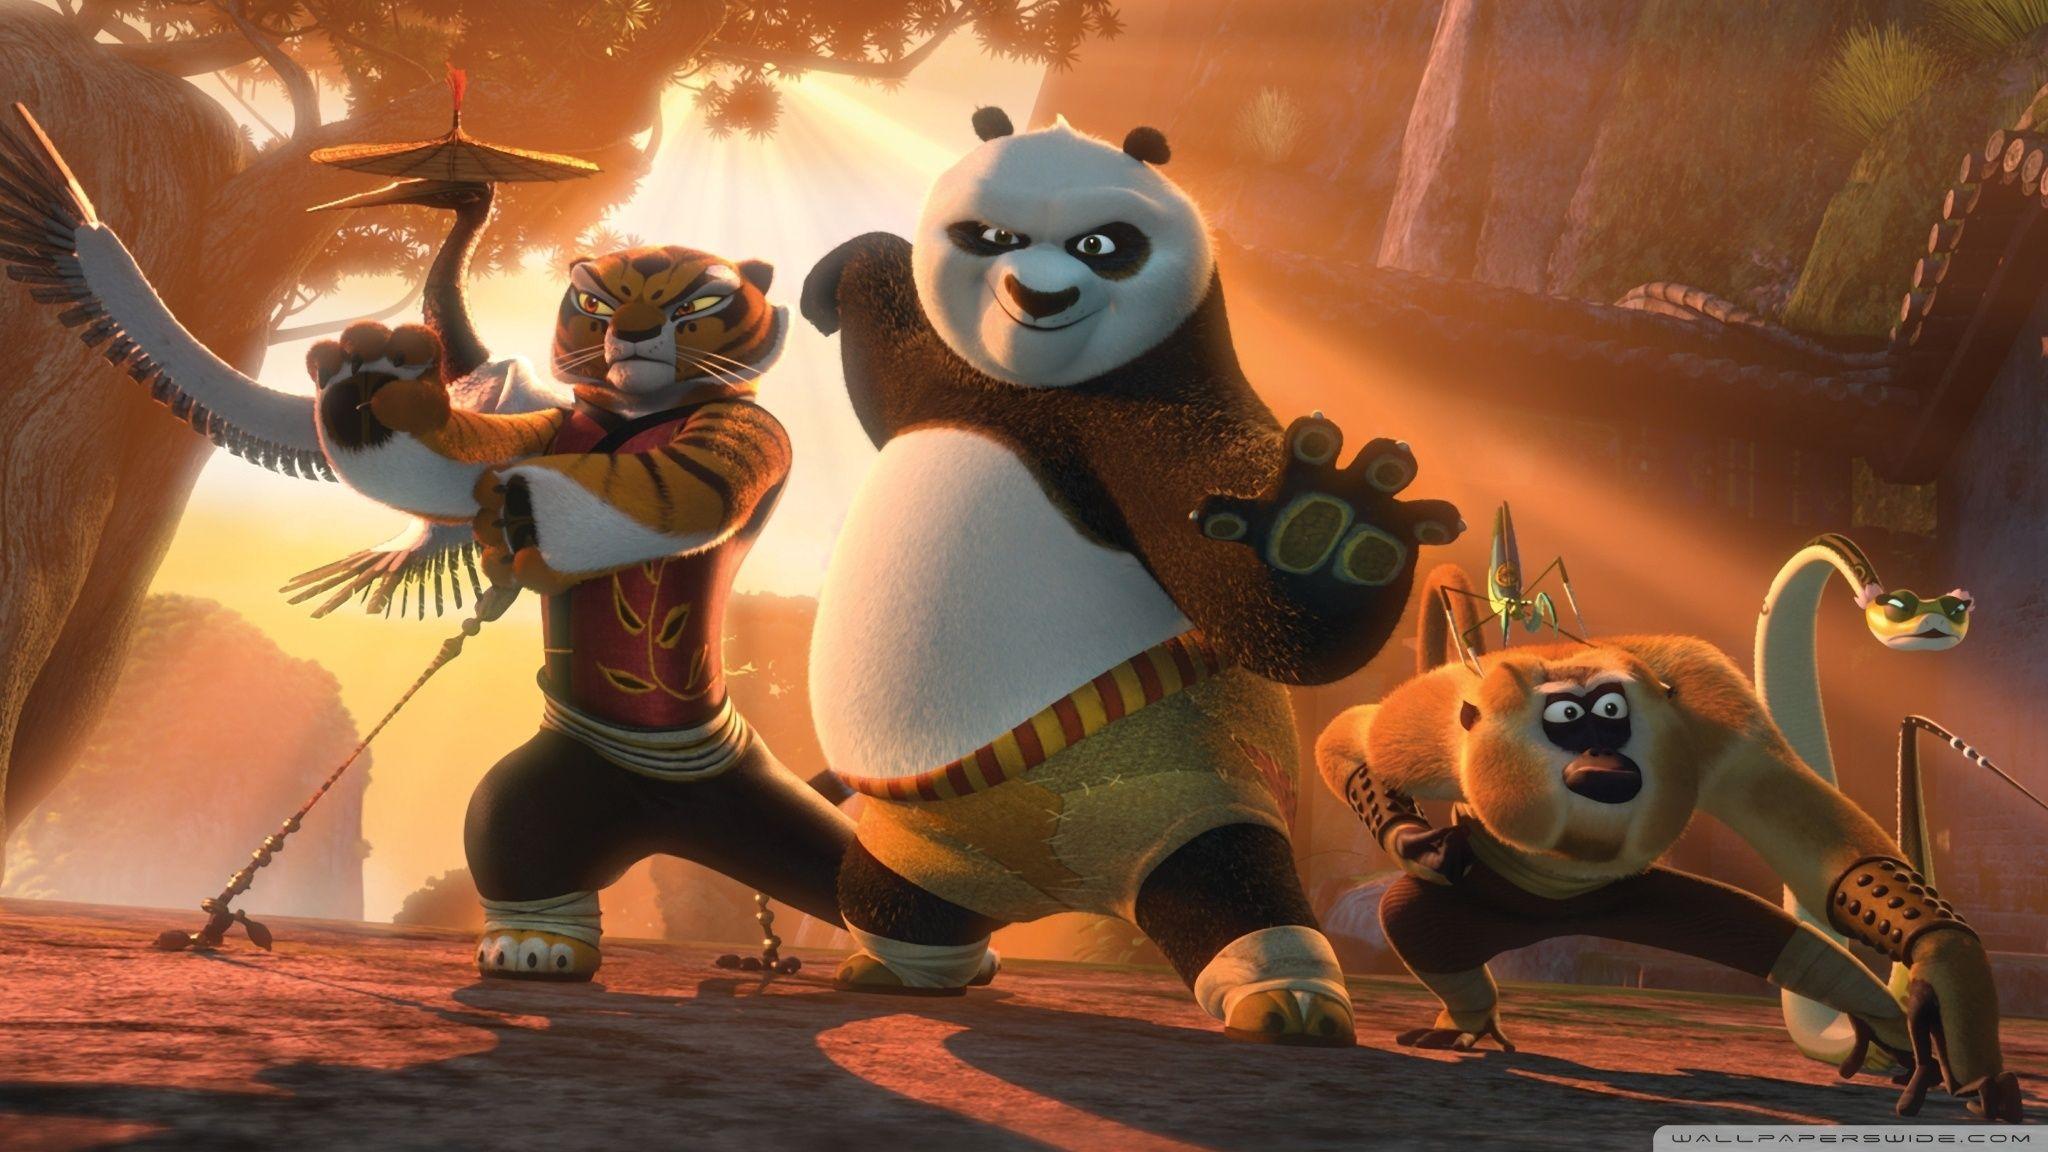 Kung Fu Panda 2 HD desktop wallpaper, Widescreen, High